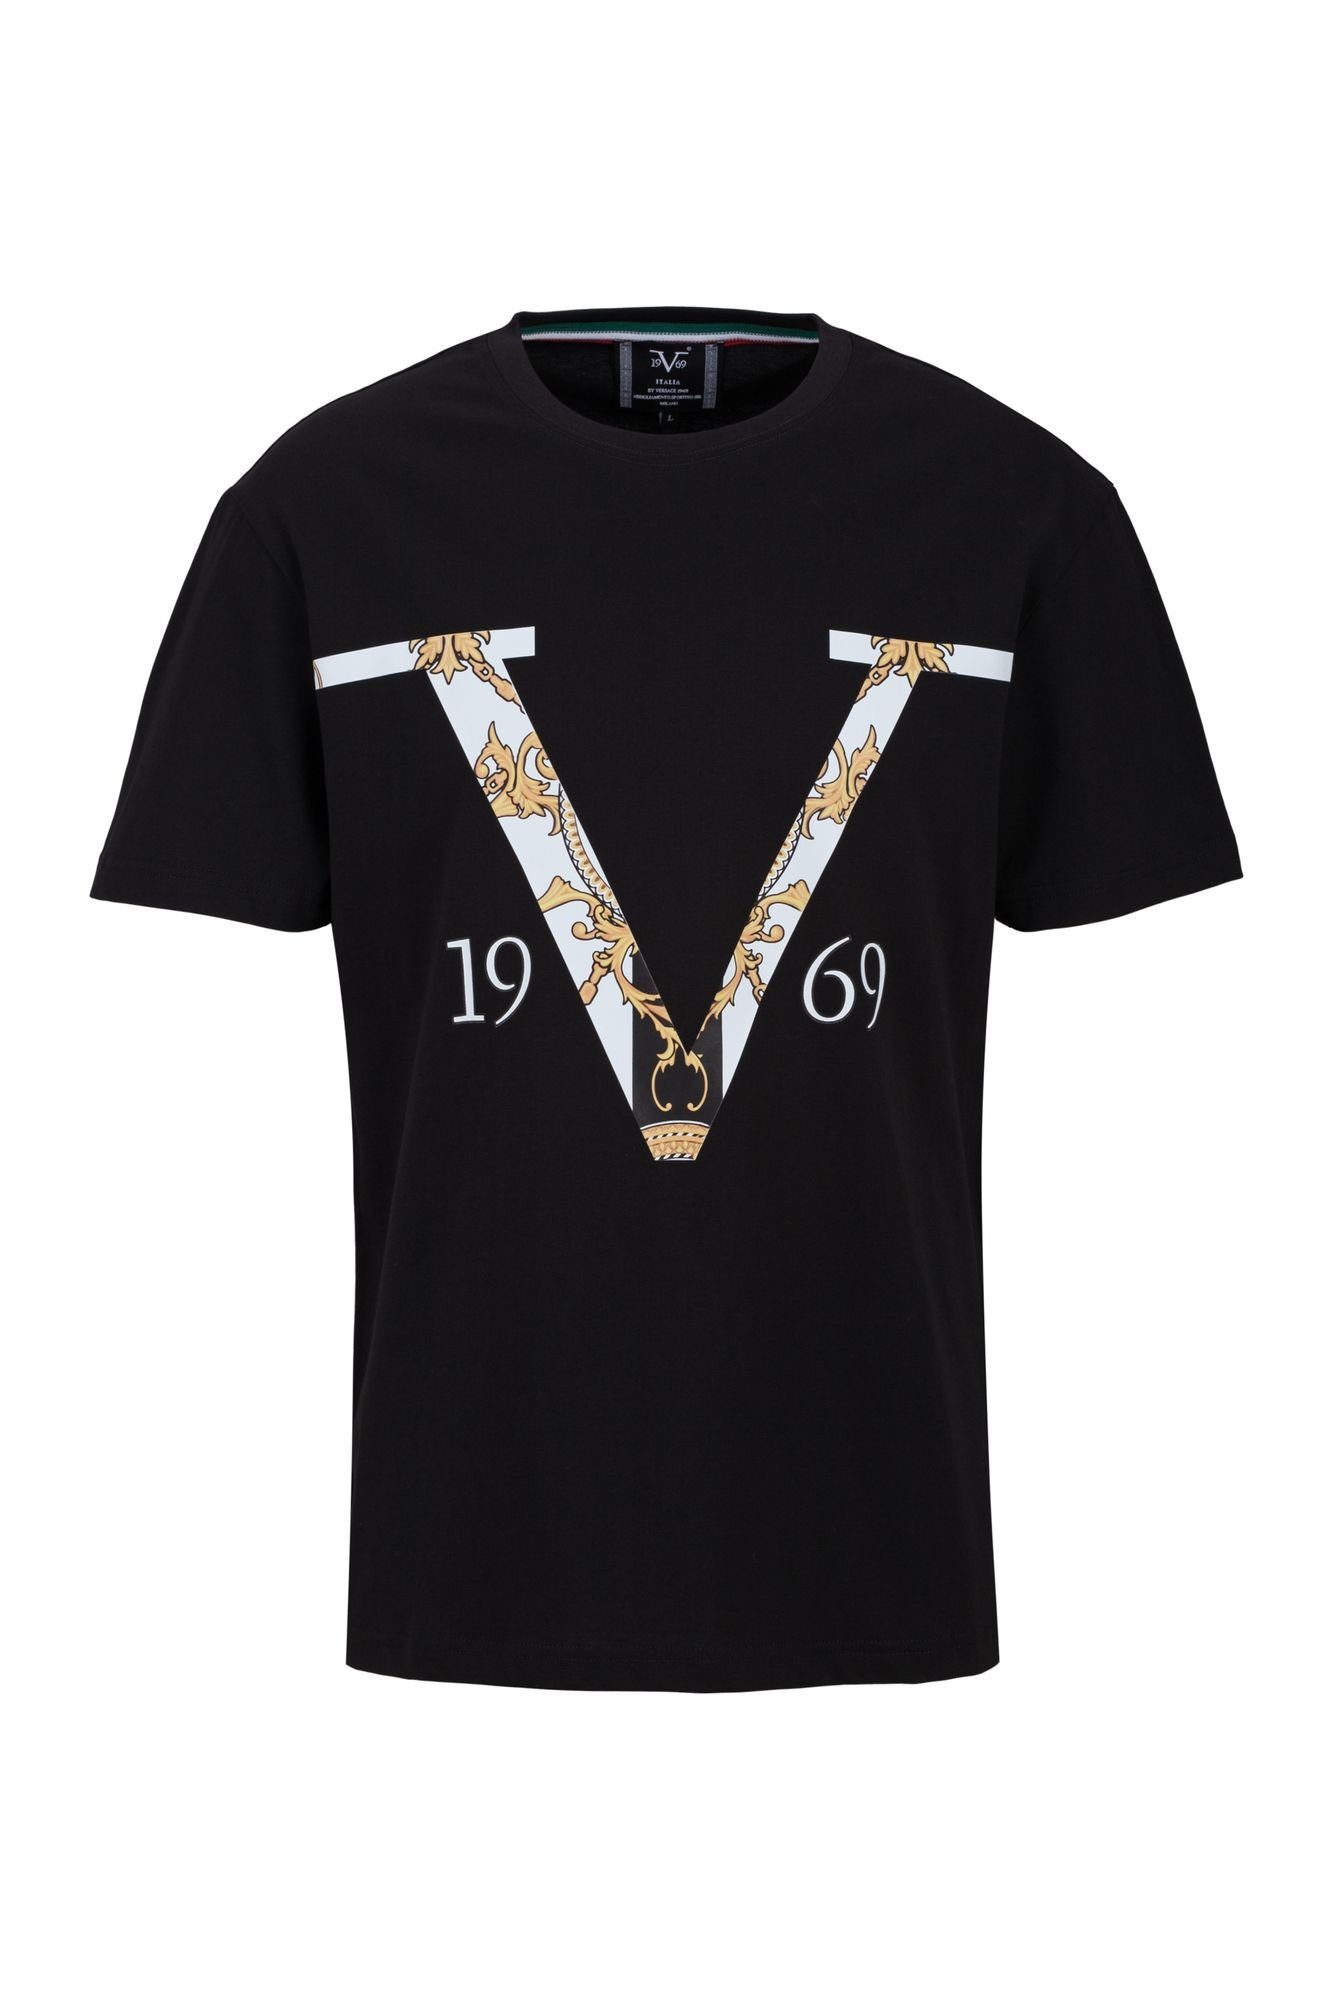 Italia Sportivo Versace Versace Kiano by T-Shirt 19V69 SRL by -